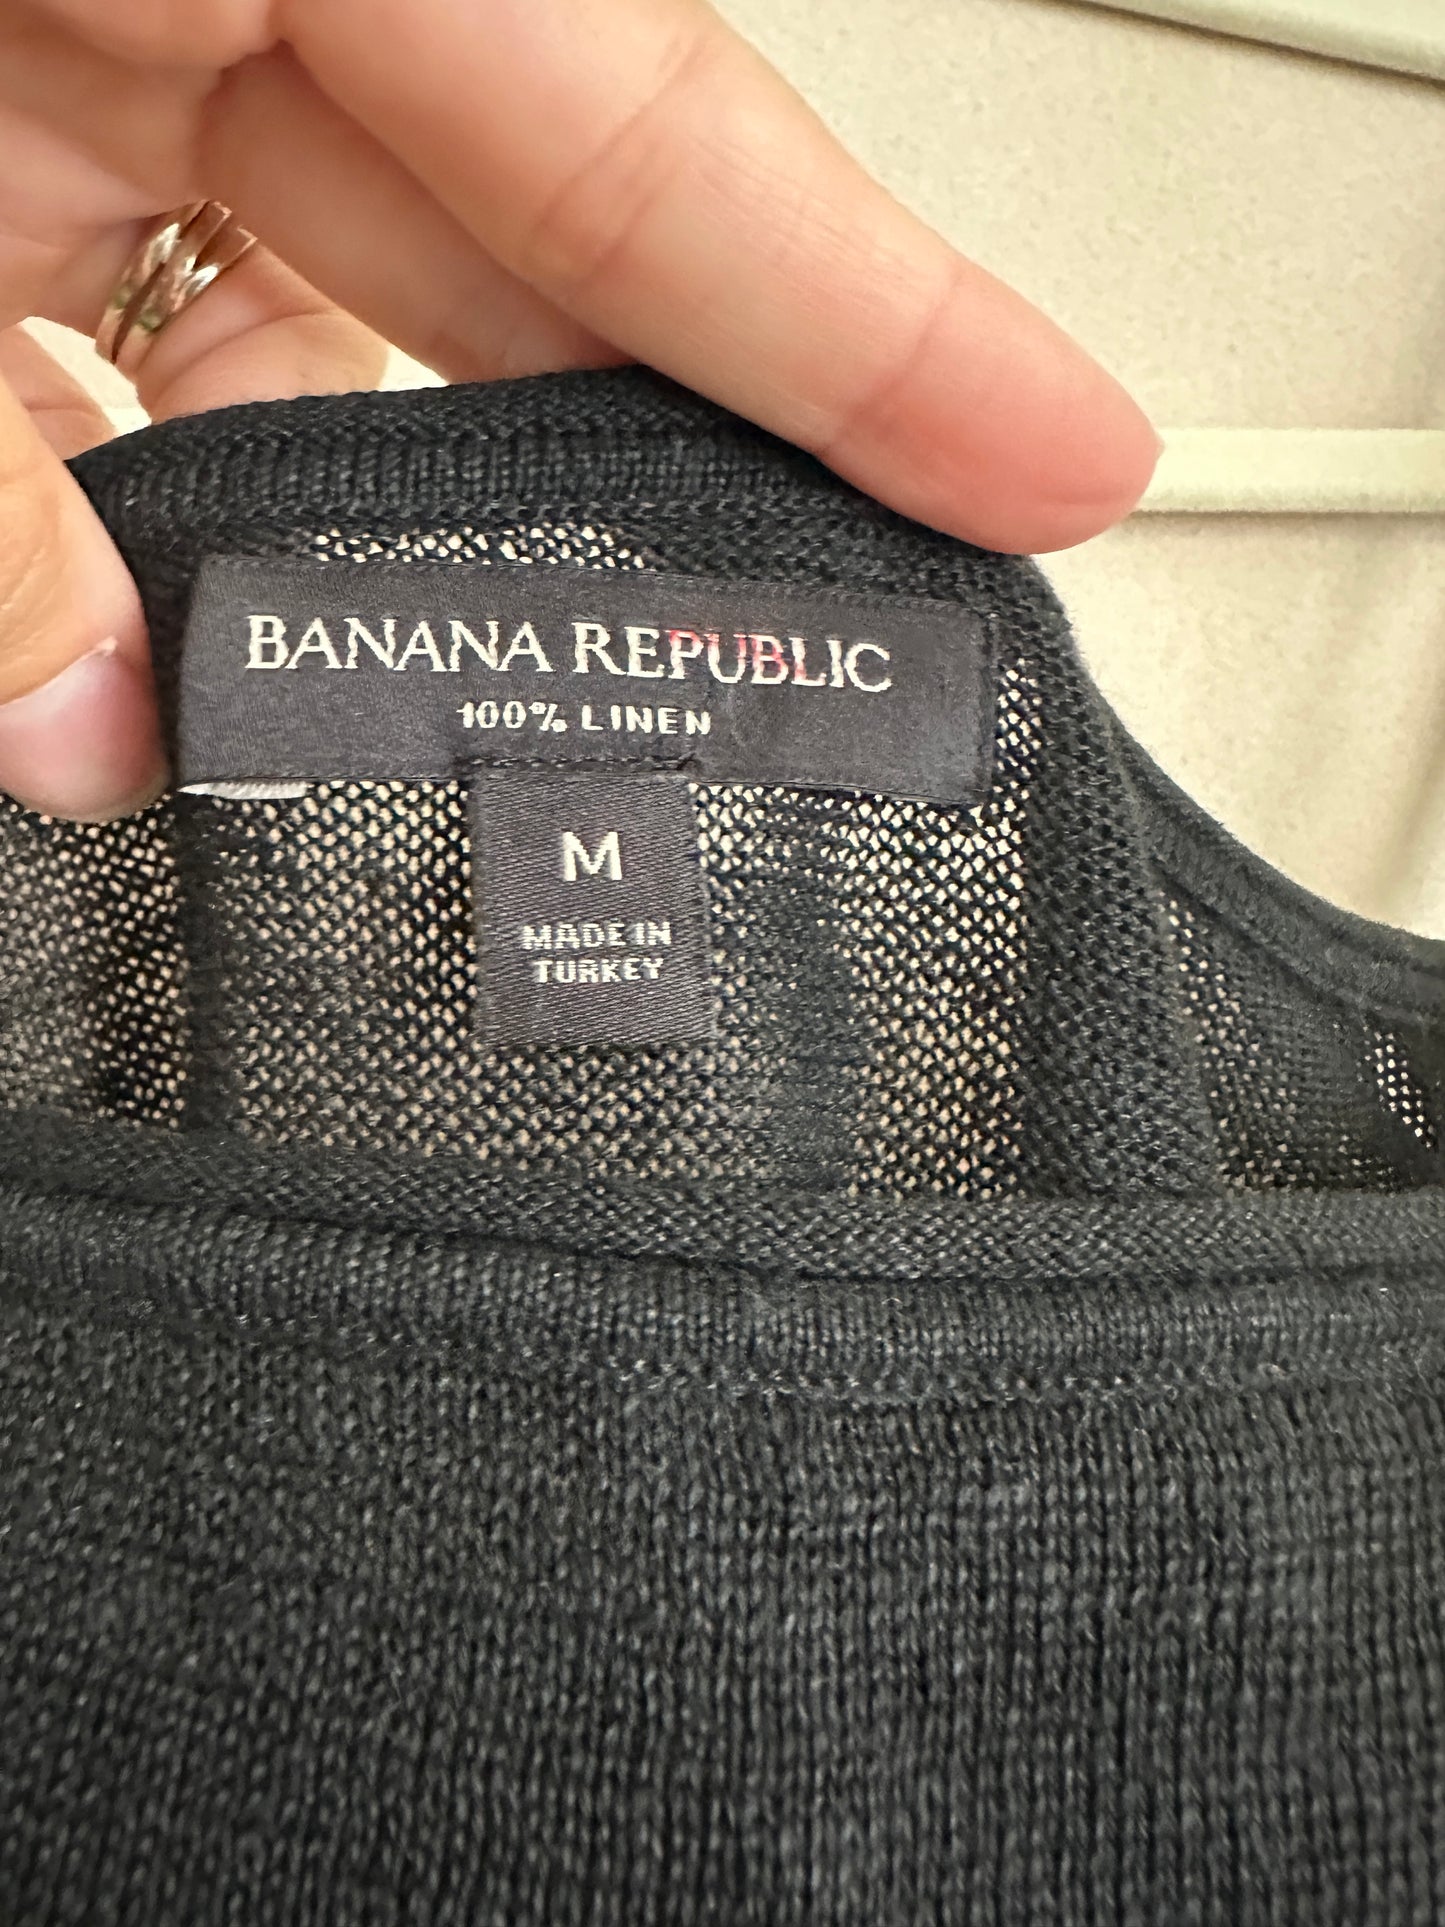 Banana Republic Black Linen Tank (fits S-M)